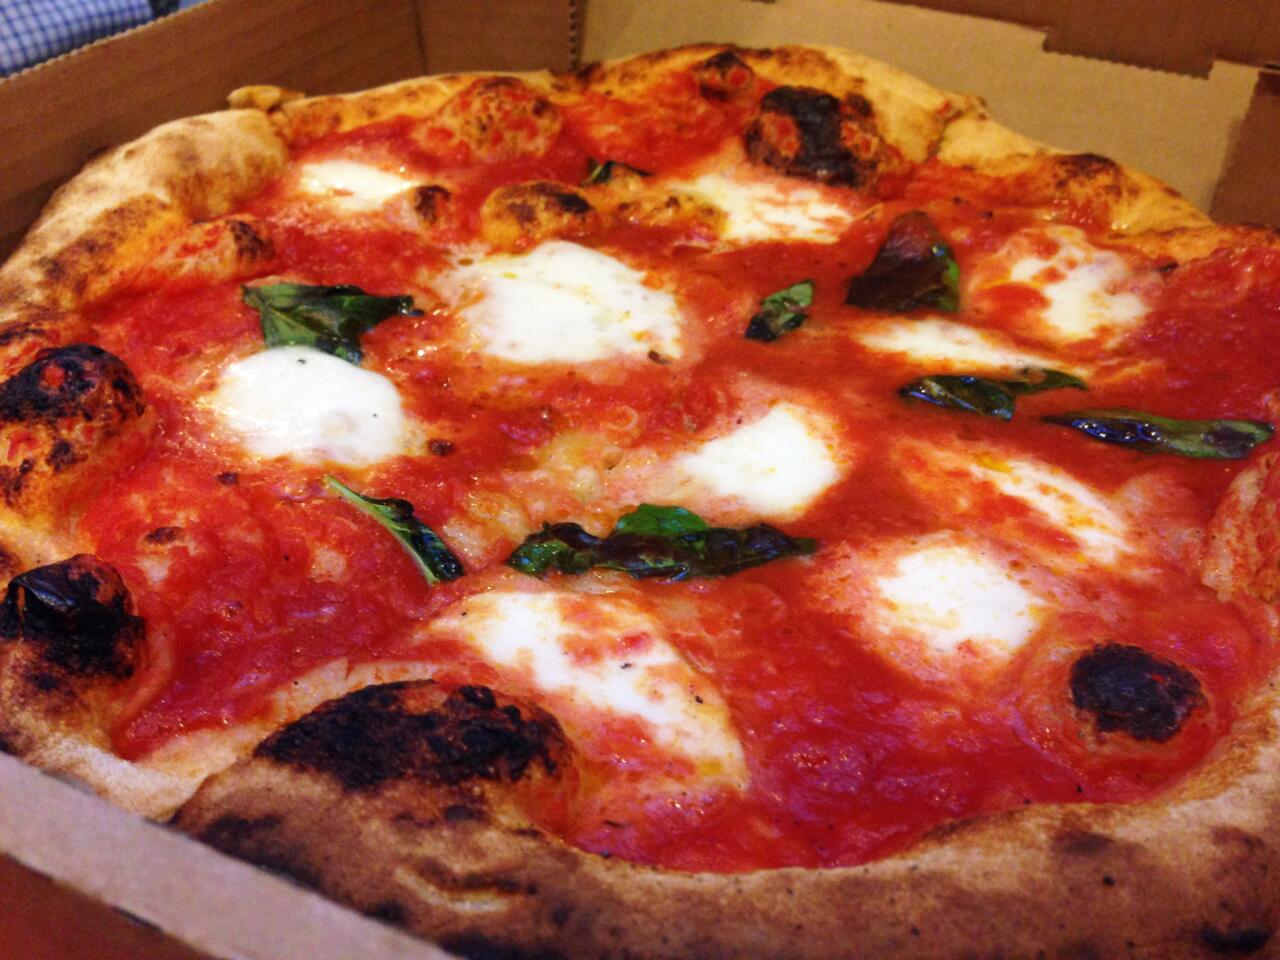 The classic Margherita pizza.